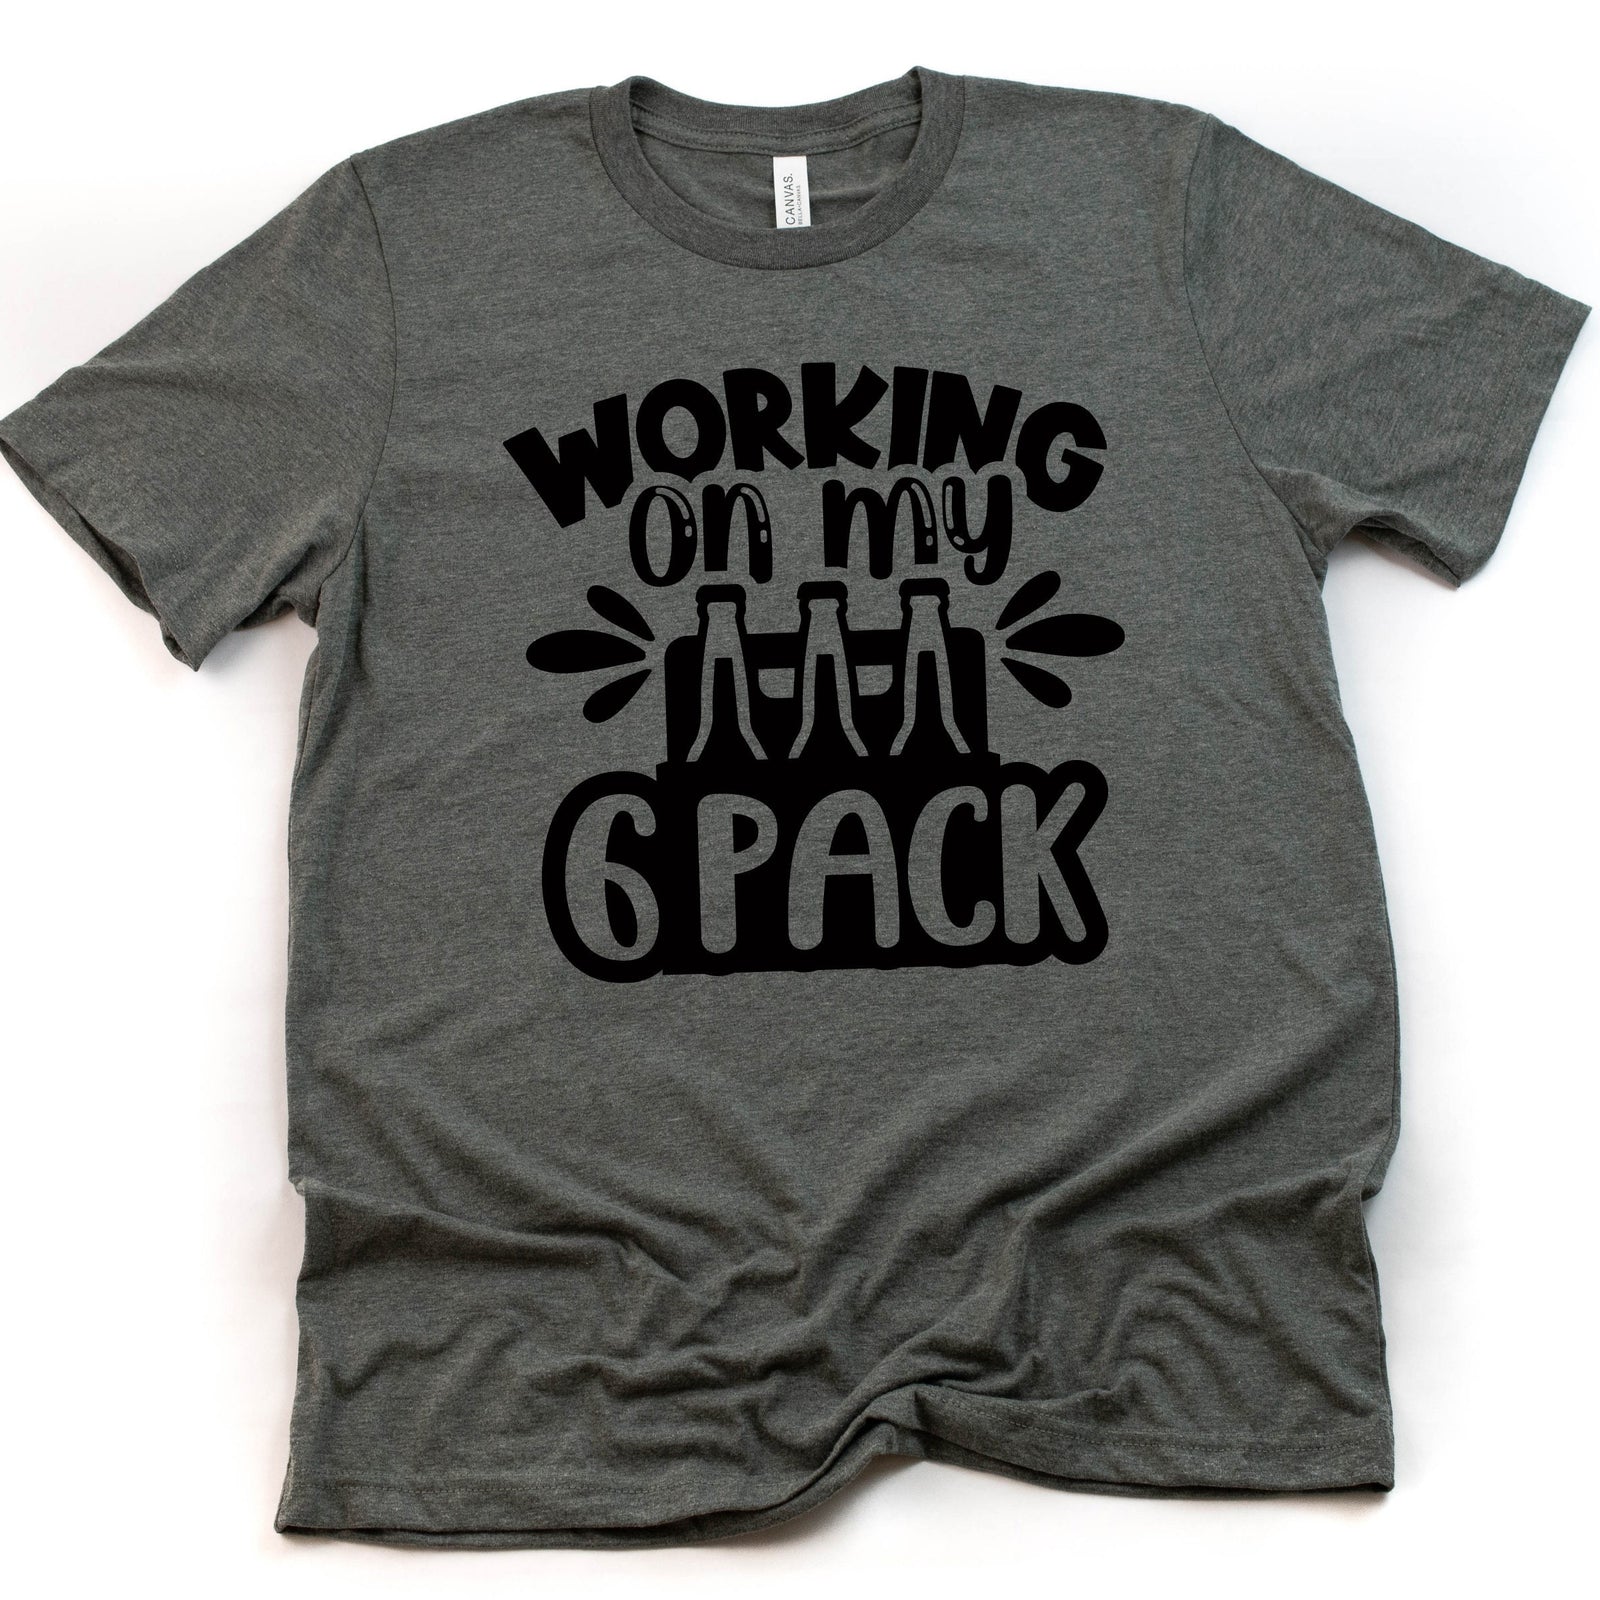 Working on my Six Pack Beer T Shirt- Funny Men's T-shirt - Beer Lover Shirt - Beer Humor Statement Shirt